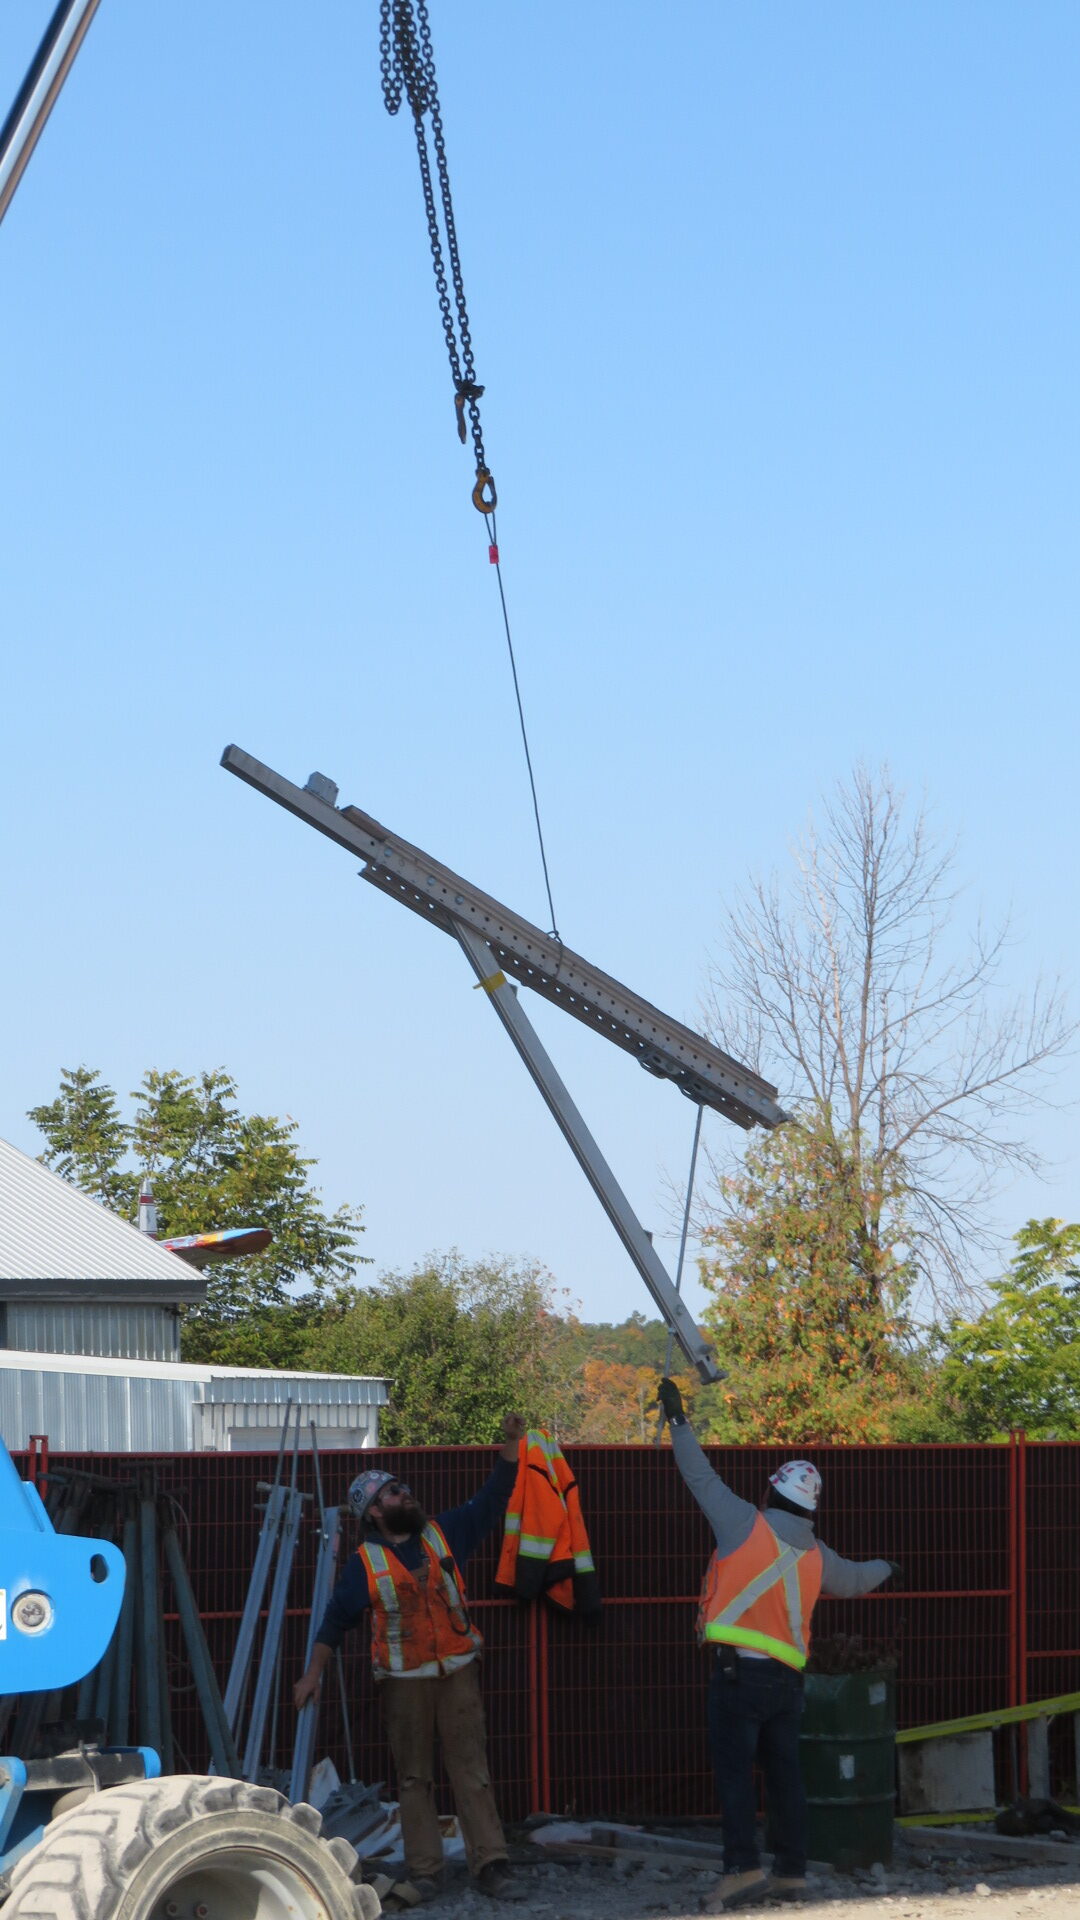 Hooking the work platform bracket to the crane